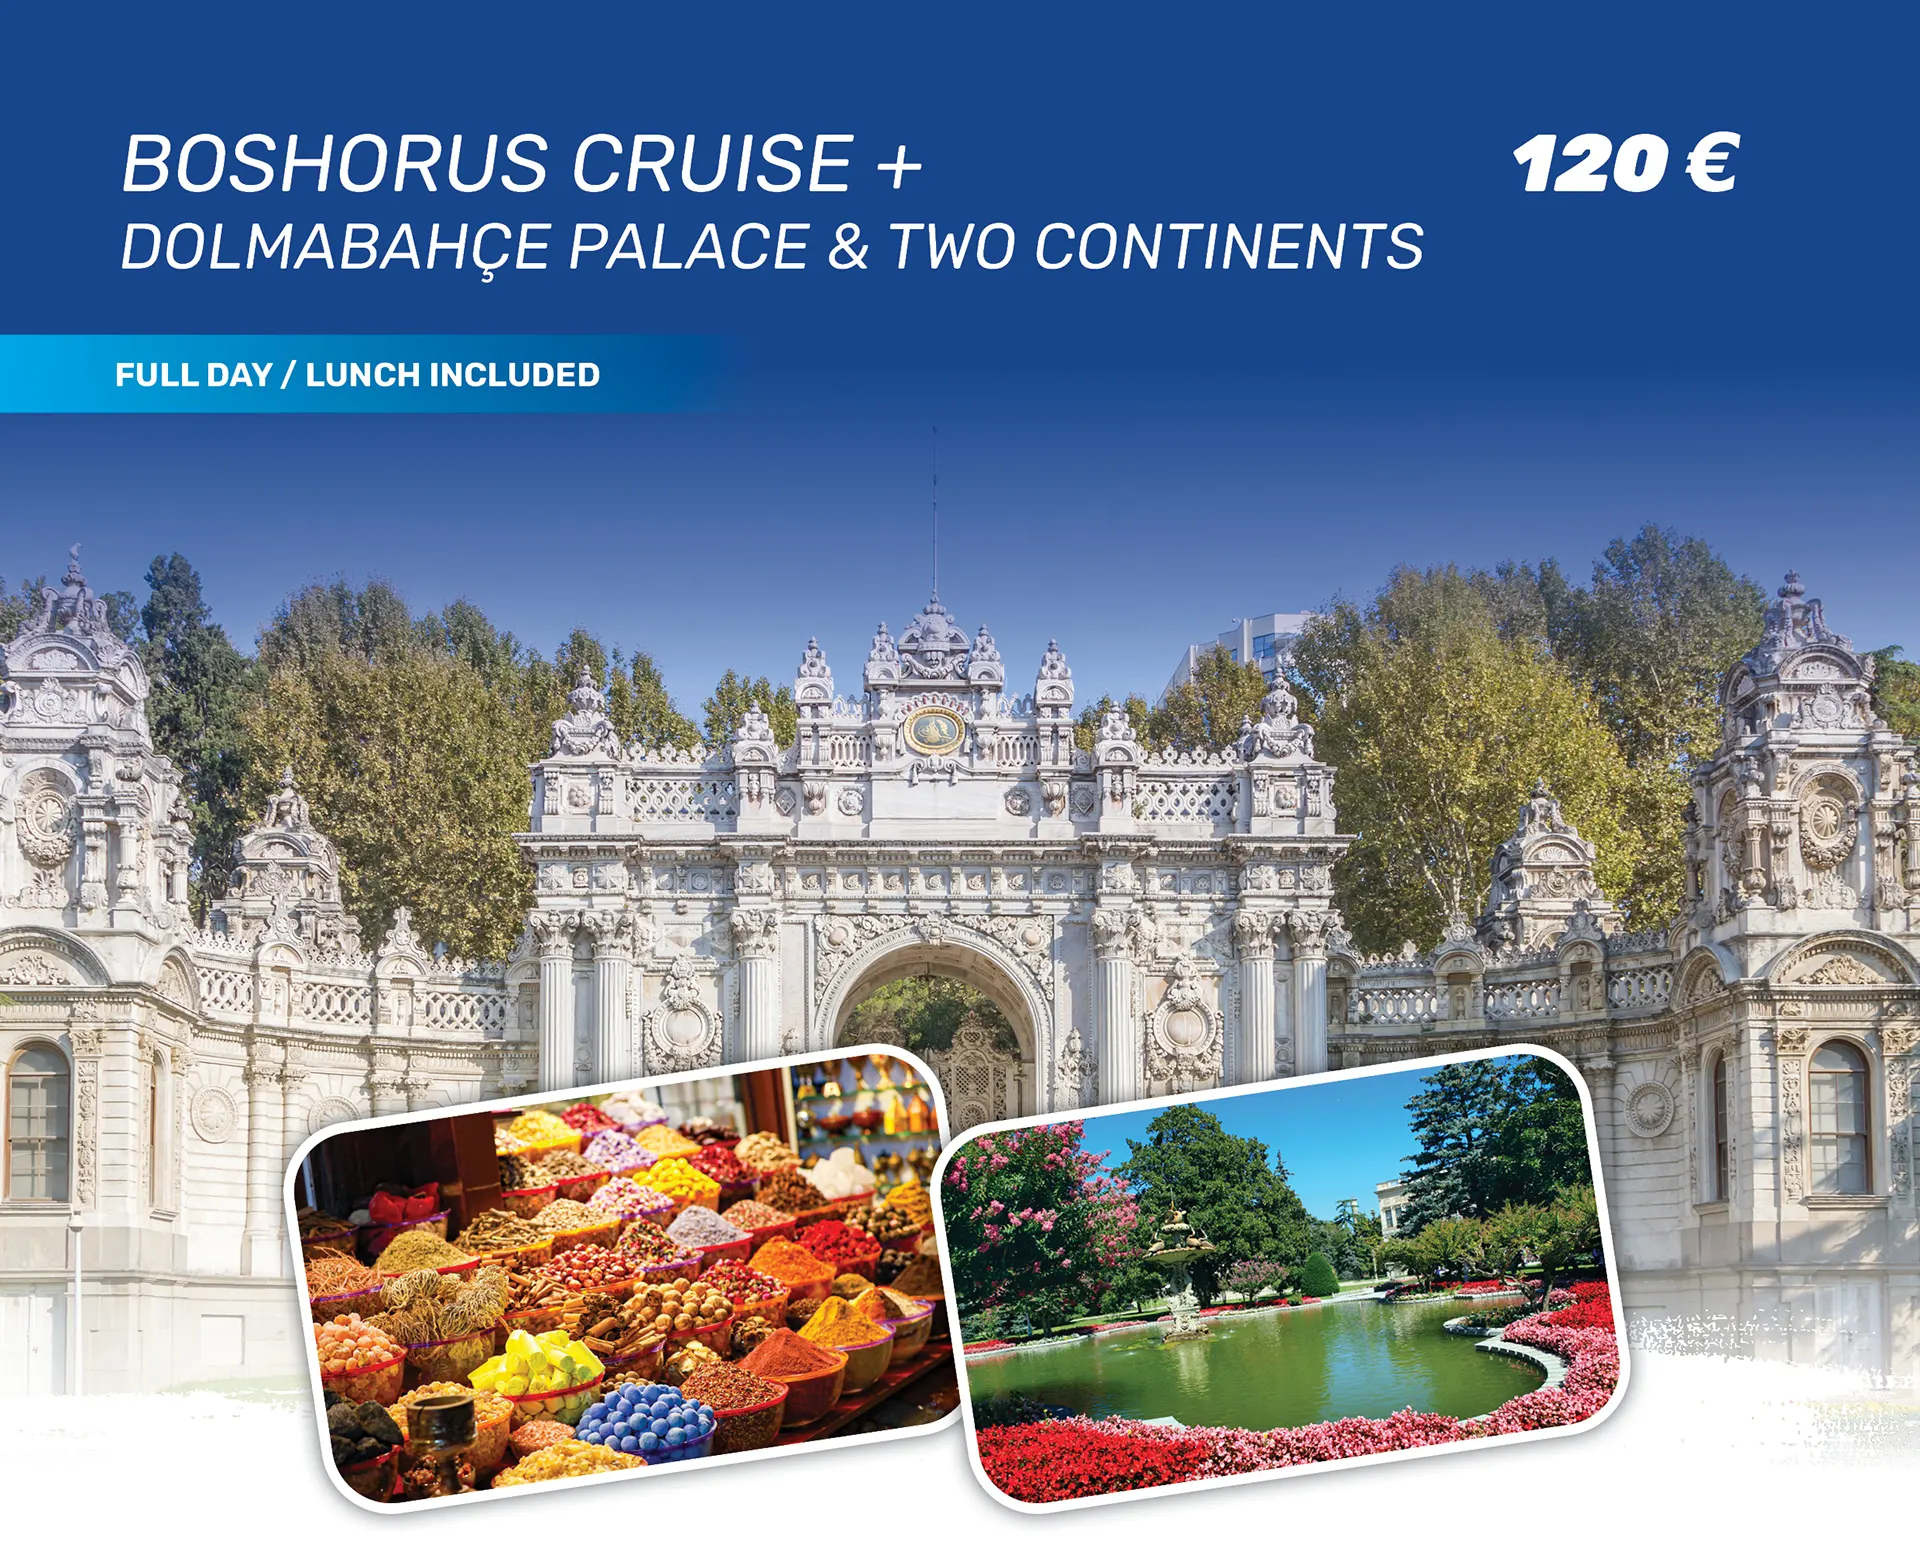 Bosphorus Cruise + Dolmabahe Palace & Two Continents